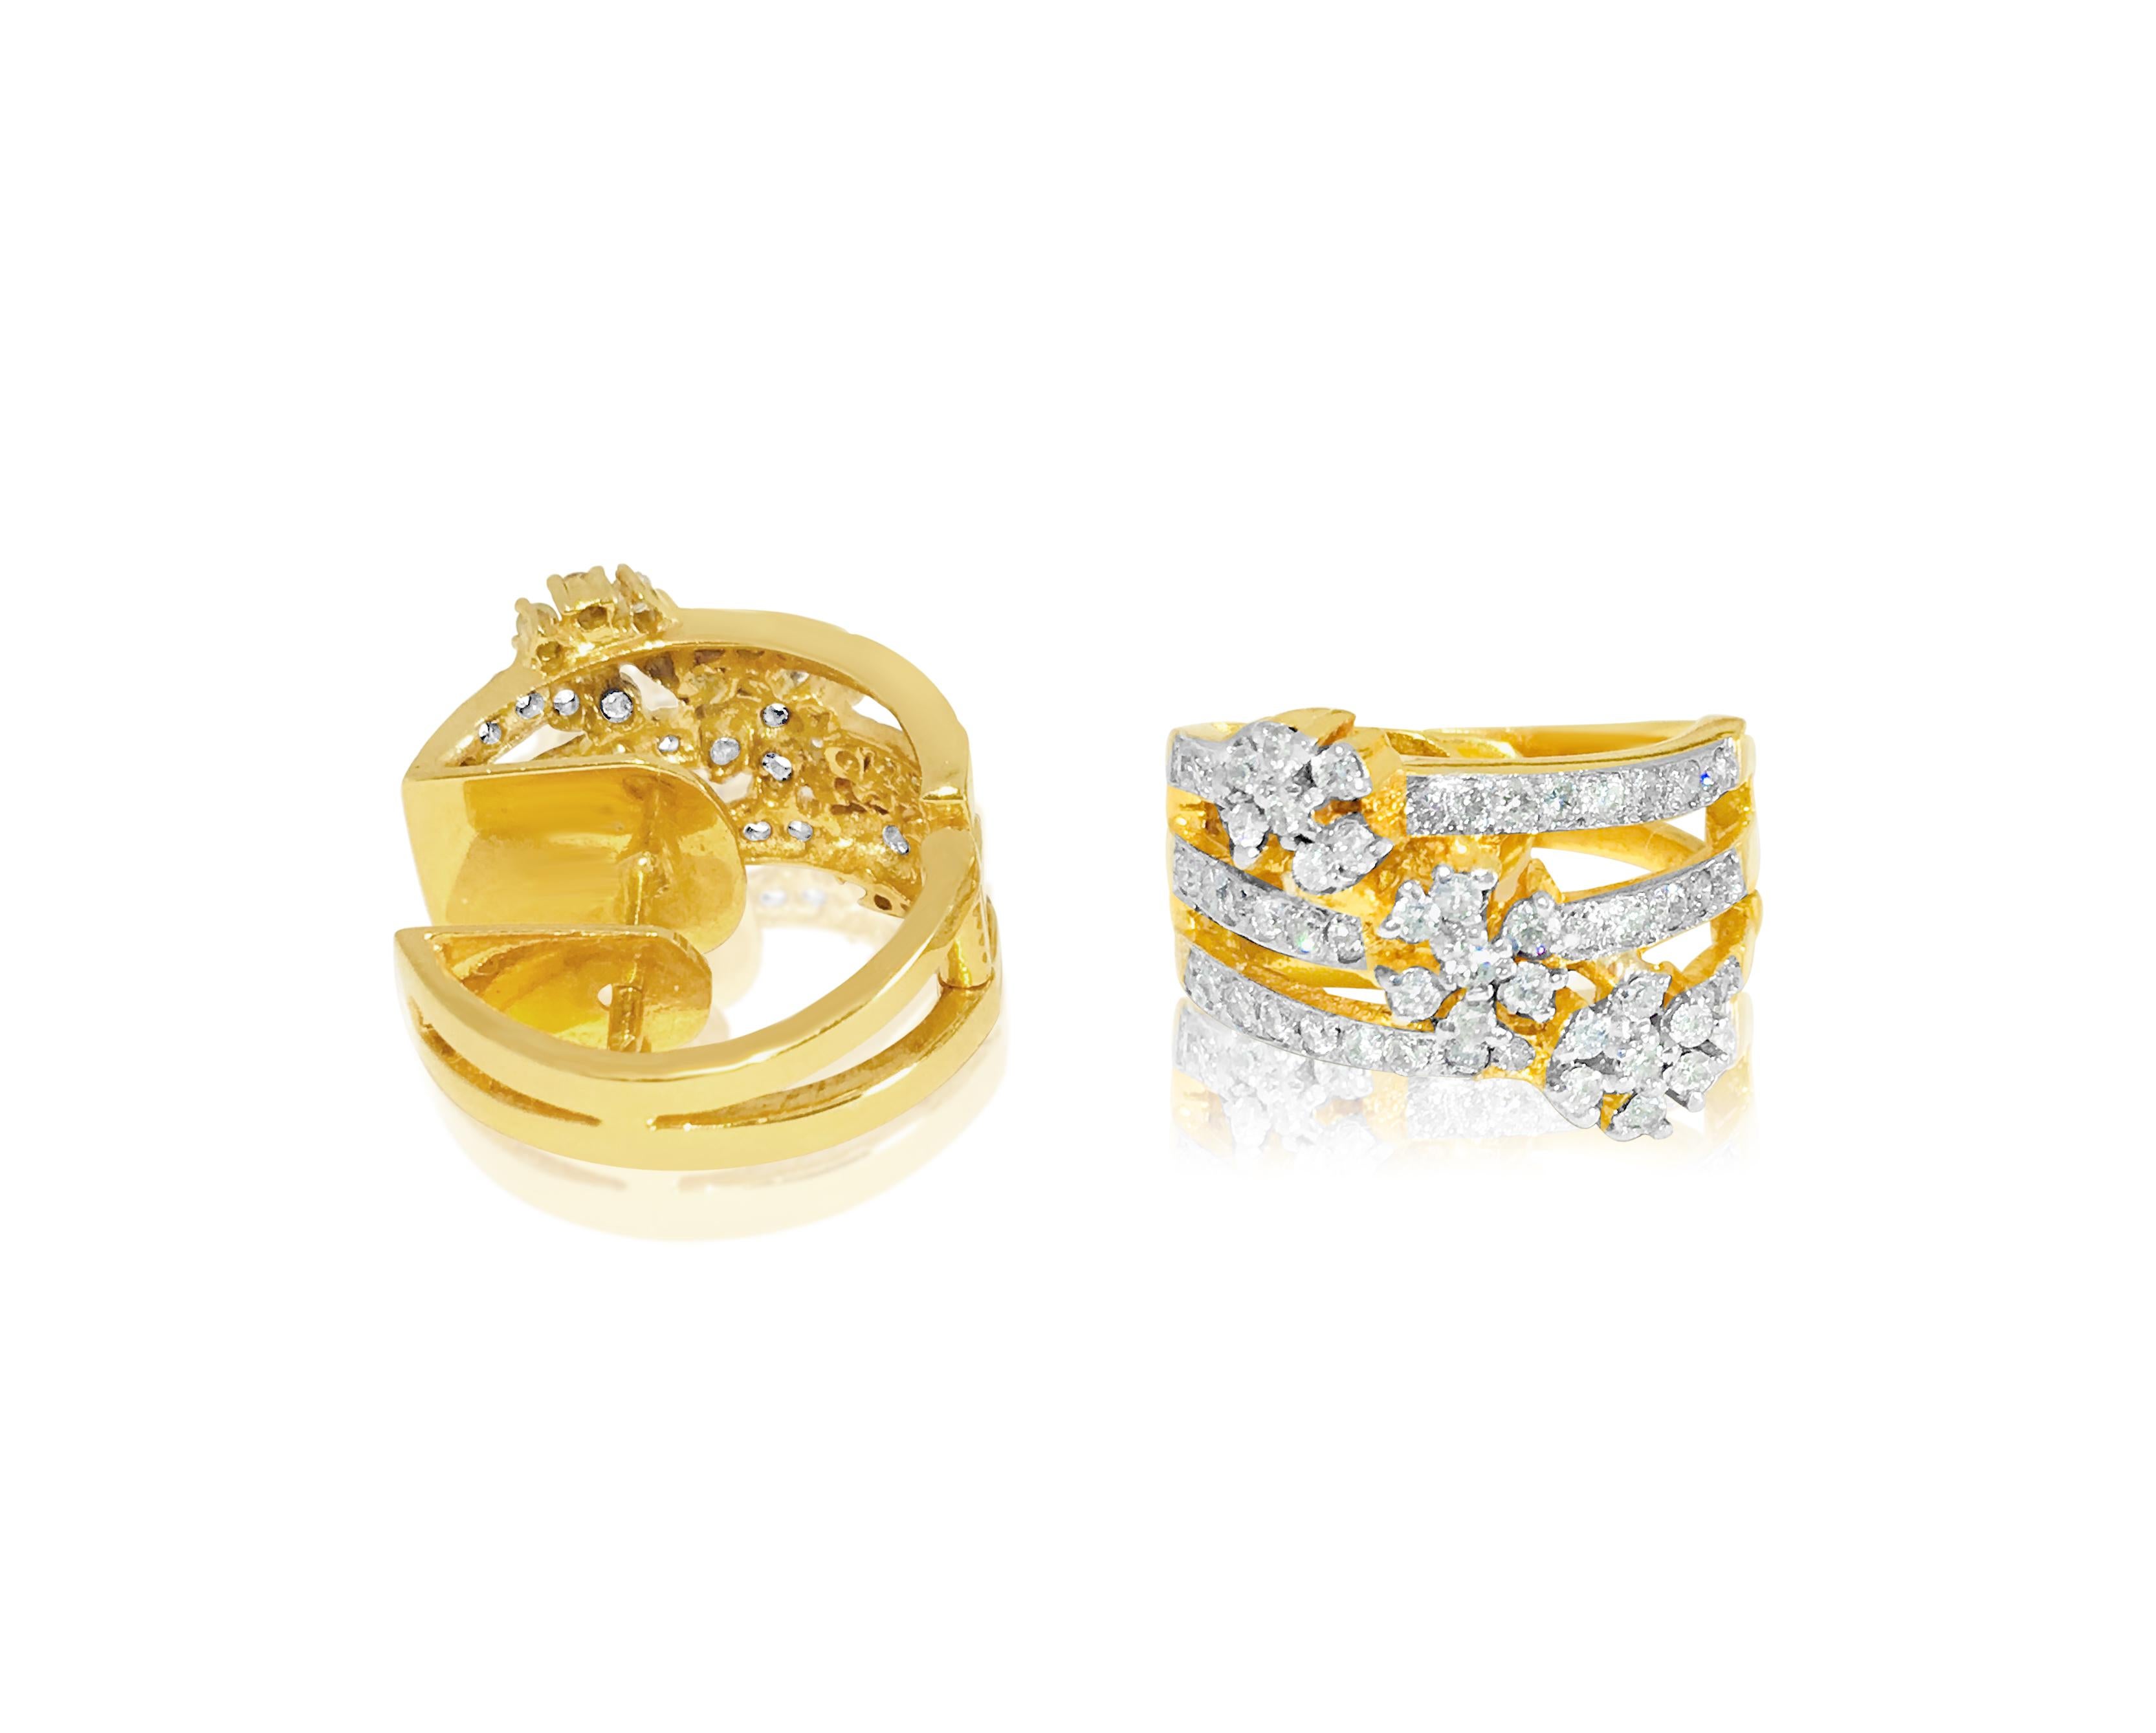 Brilliant Cut 1.35 Carat Diamonds in 14k Yellow Gold Earrings. For Sale